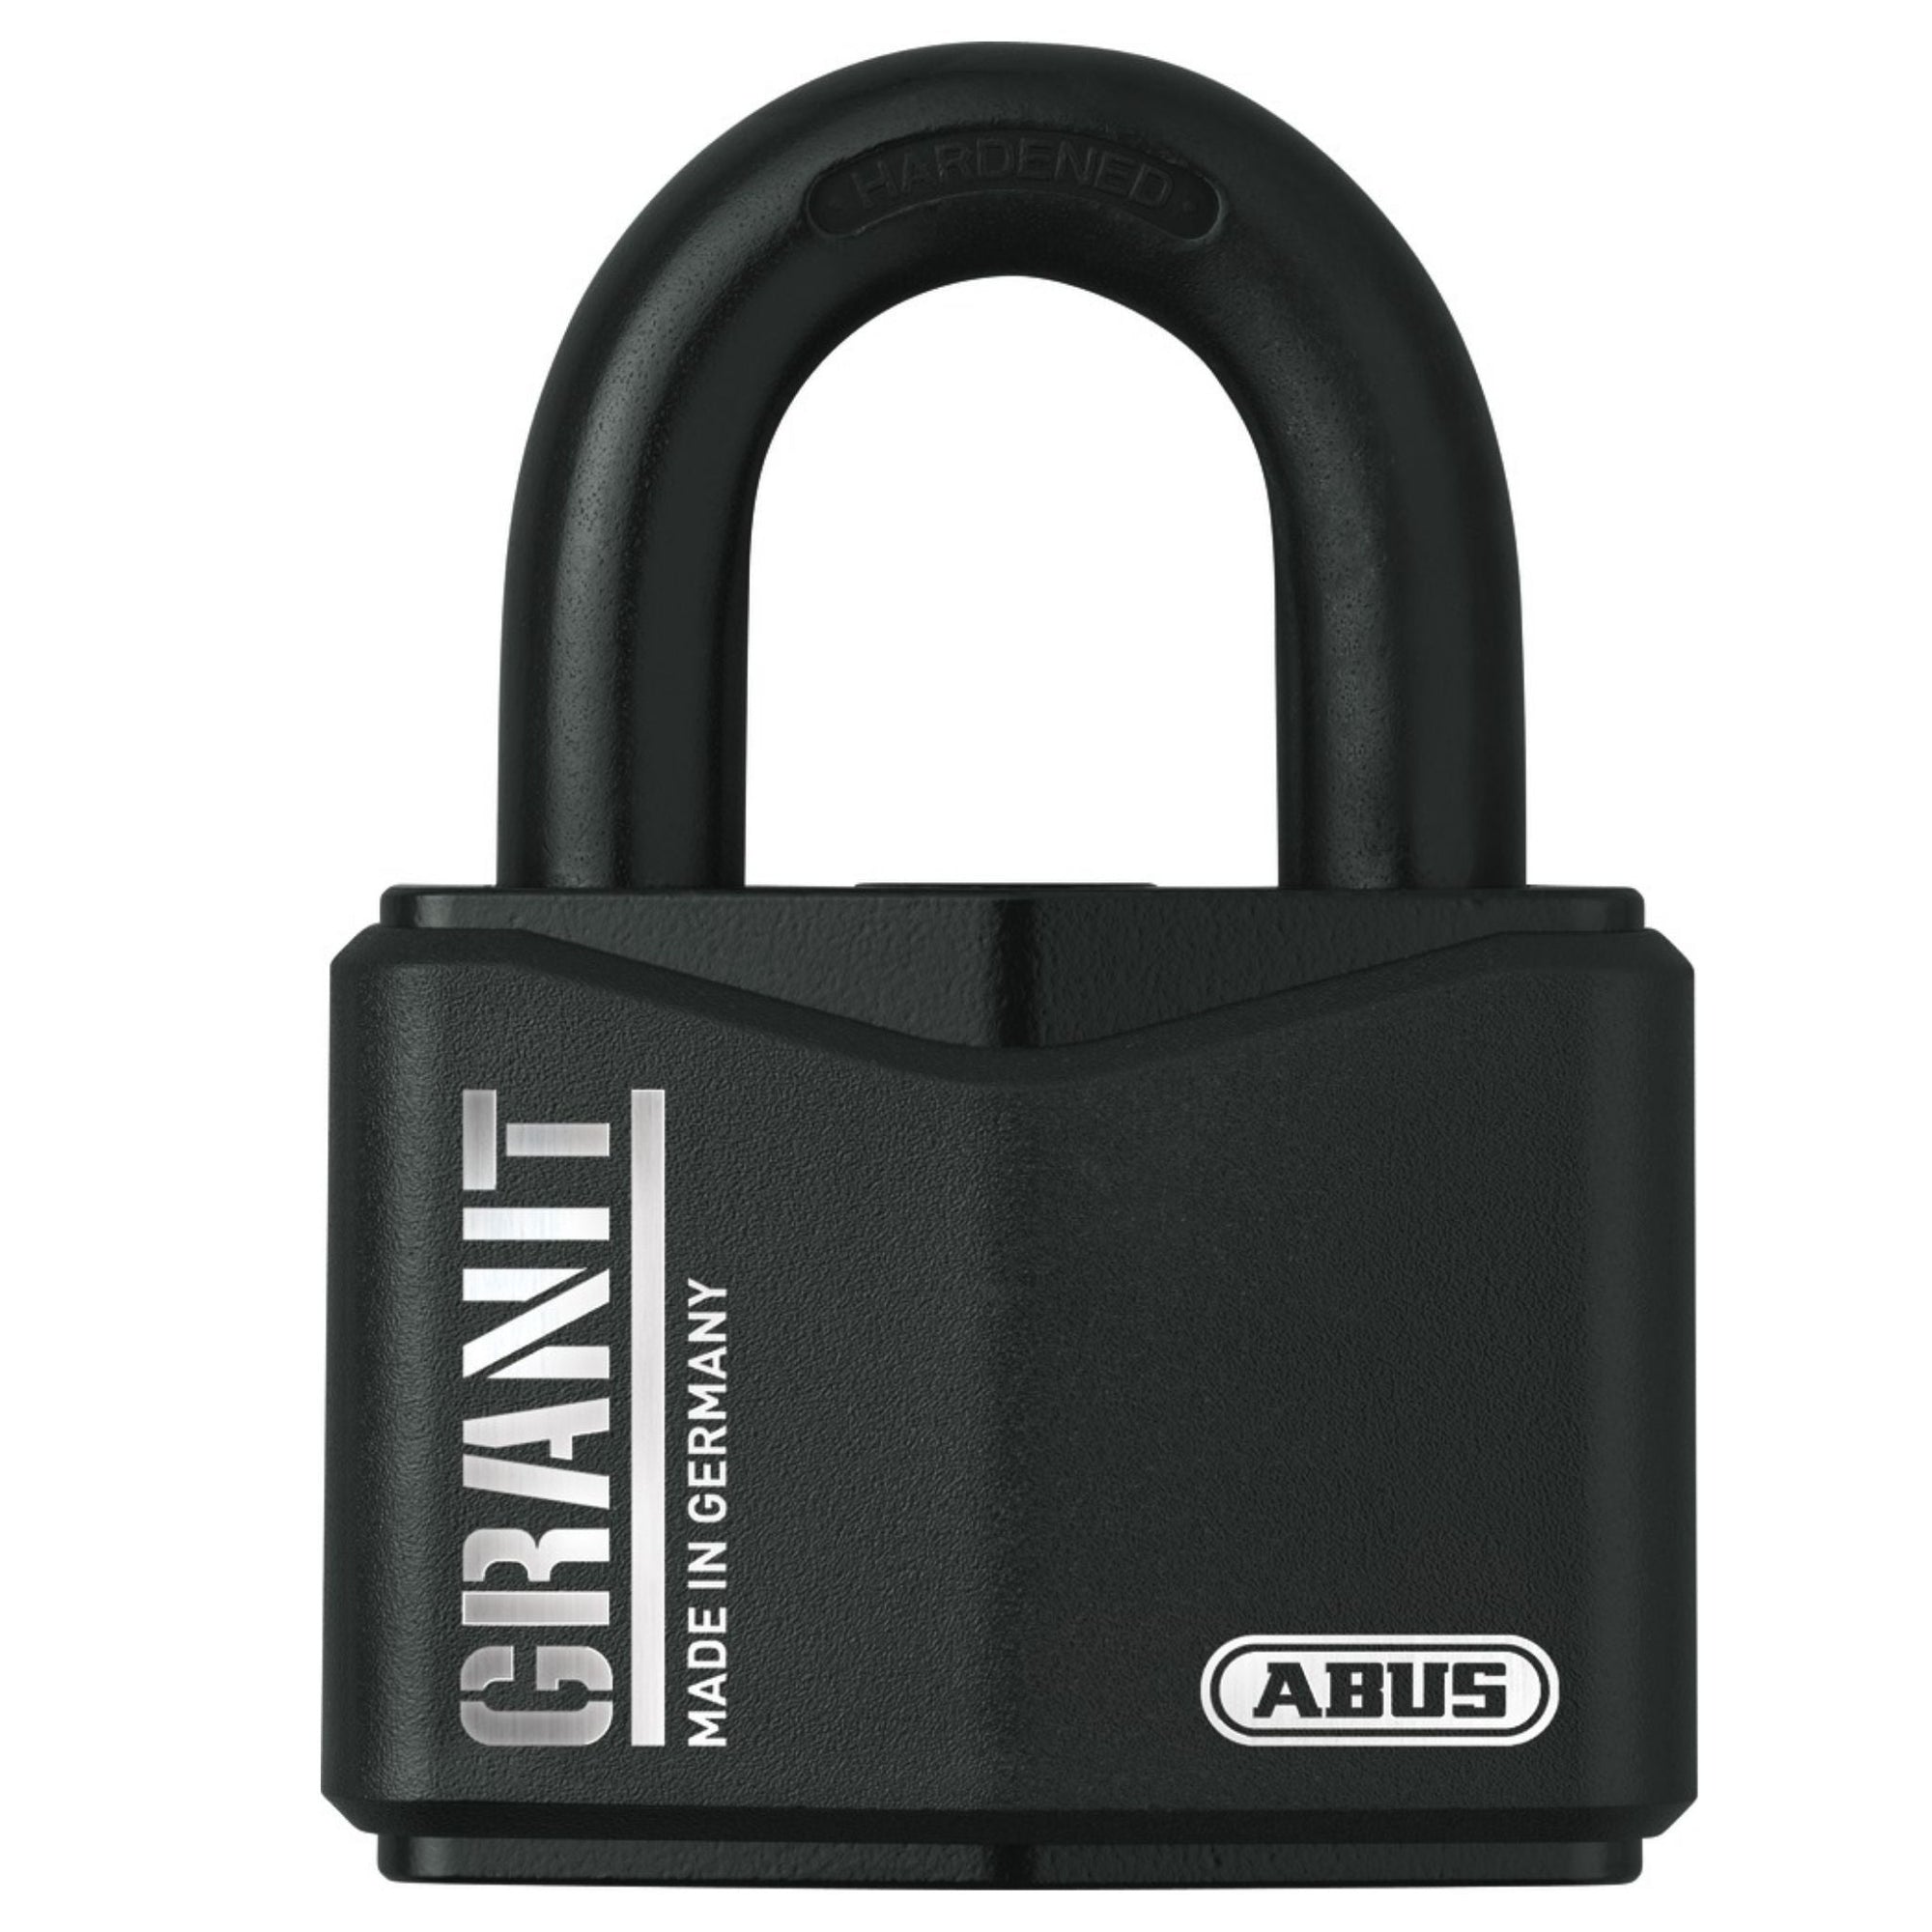 Abus 37/70 KA 5544653 Granit Lock Keyed Alike in Set of Two Locks Matched to Existing Key# 5544653 - The Lock Source